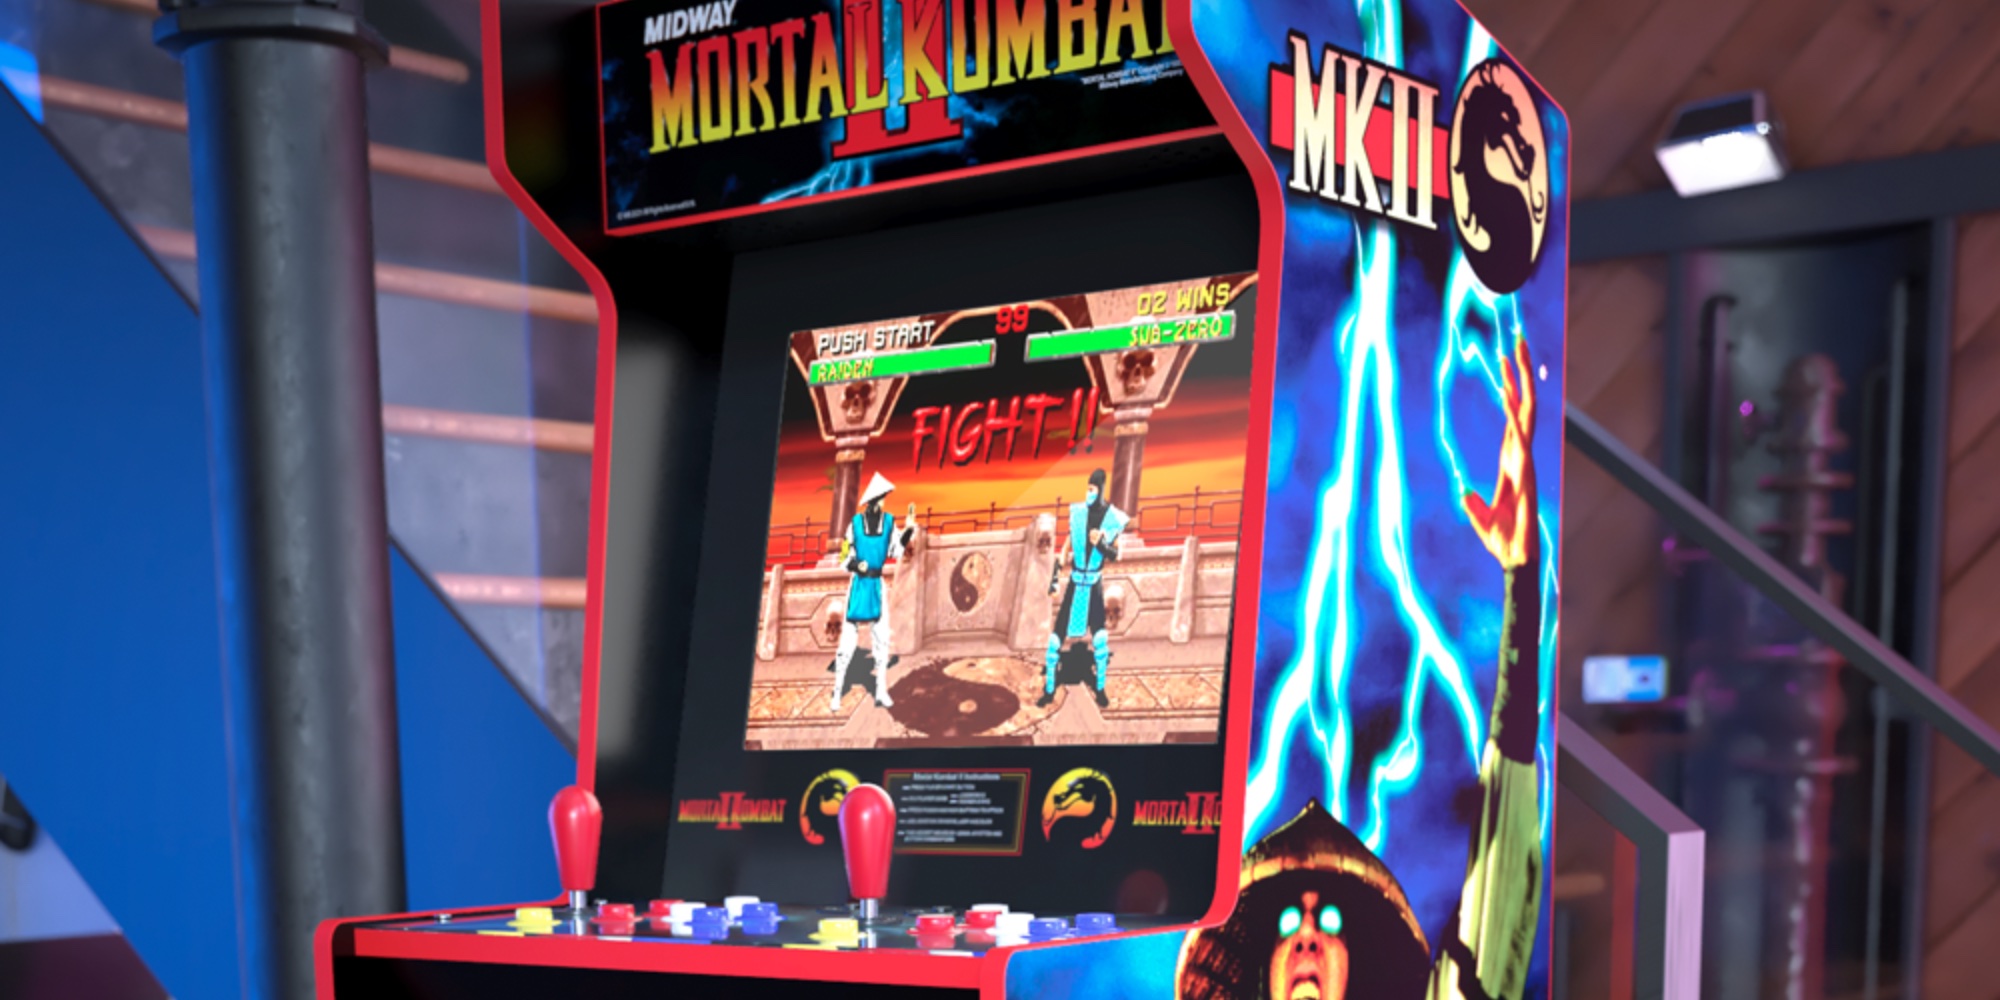  Arcade1UP Mortal Kombat Countercade 3 Games in 1 : Toys & Games